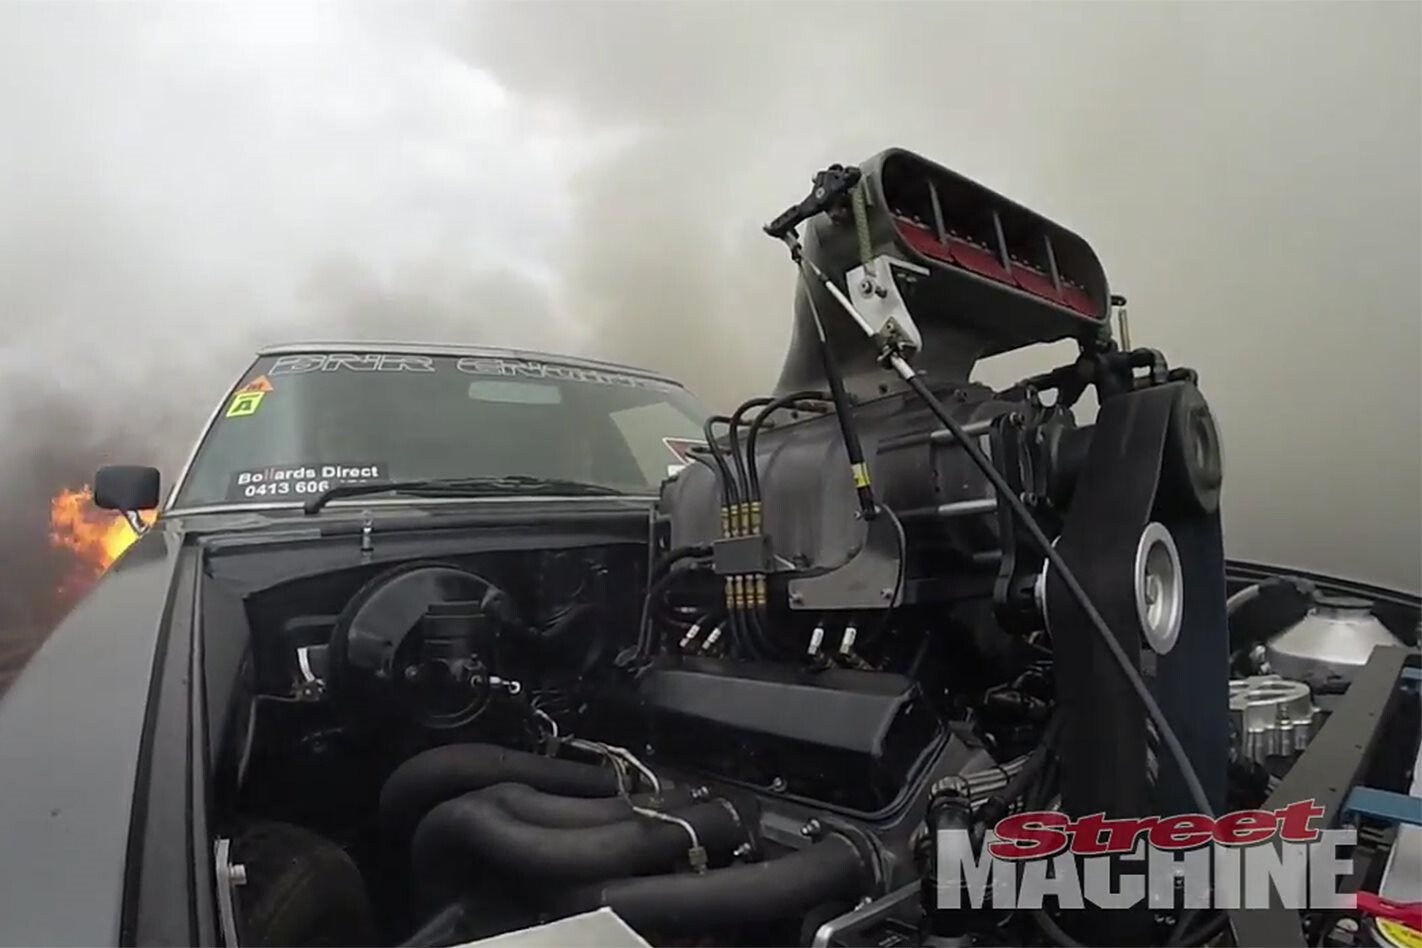 VIDEO: IMMORTAL HOLDEN UTE FIRES UP AT MOTORFEST